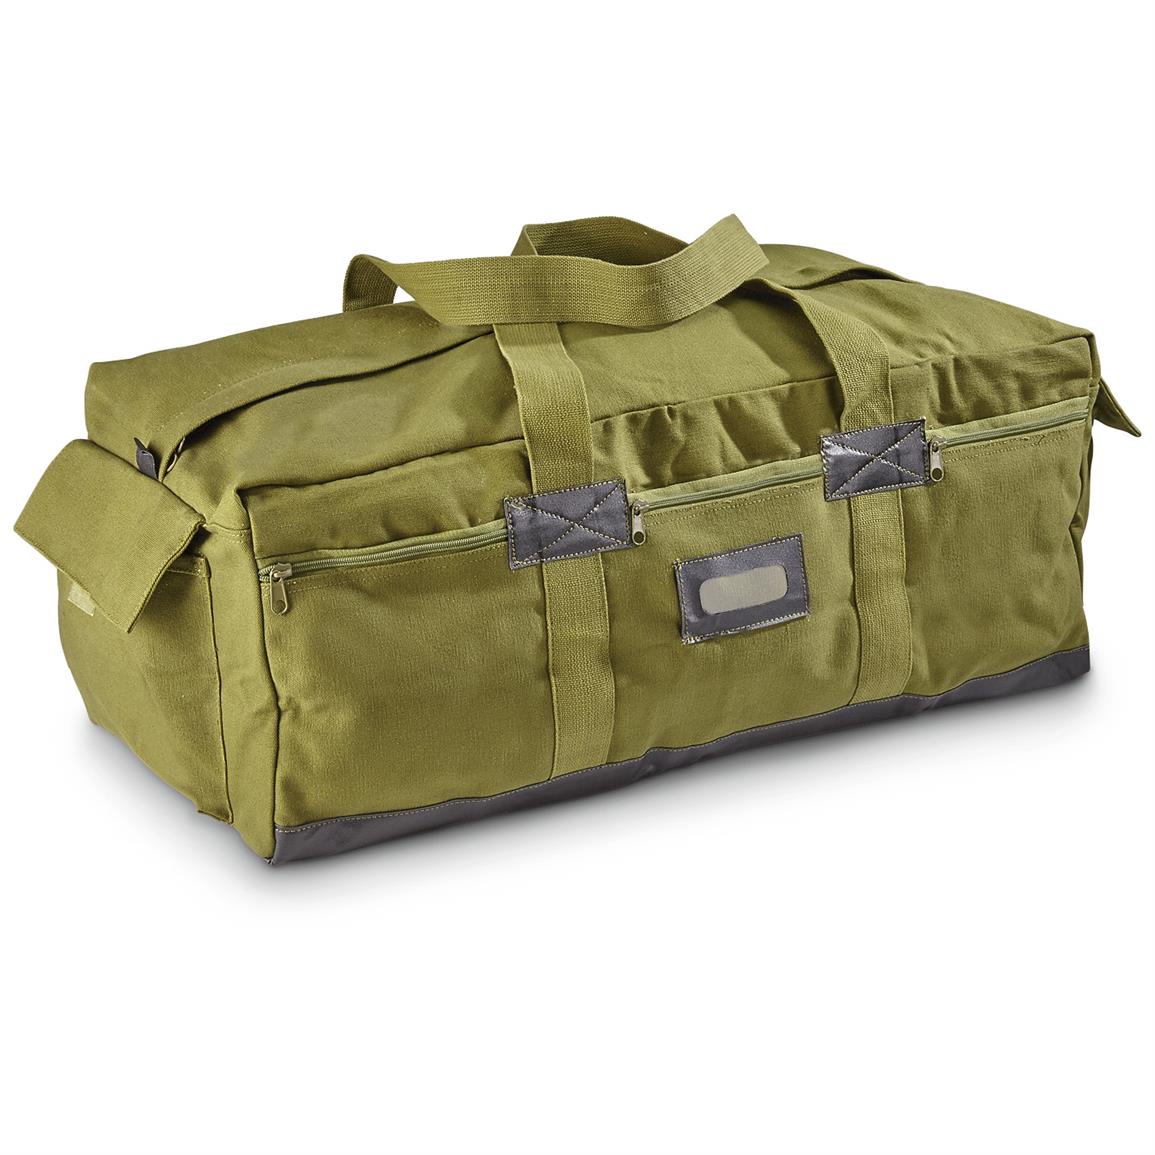 Military-style Israeli Duffel Bag - 653001, Duffle Bags at Sportsman&#39;s Guide